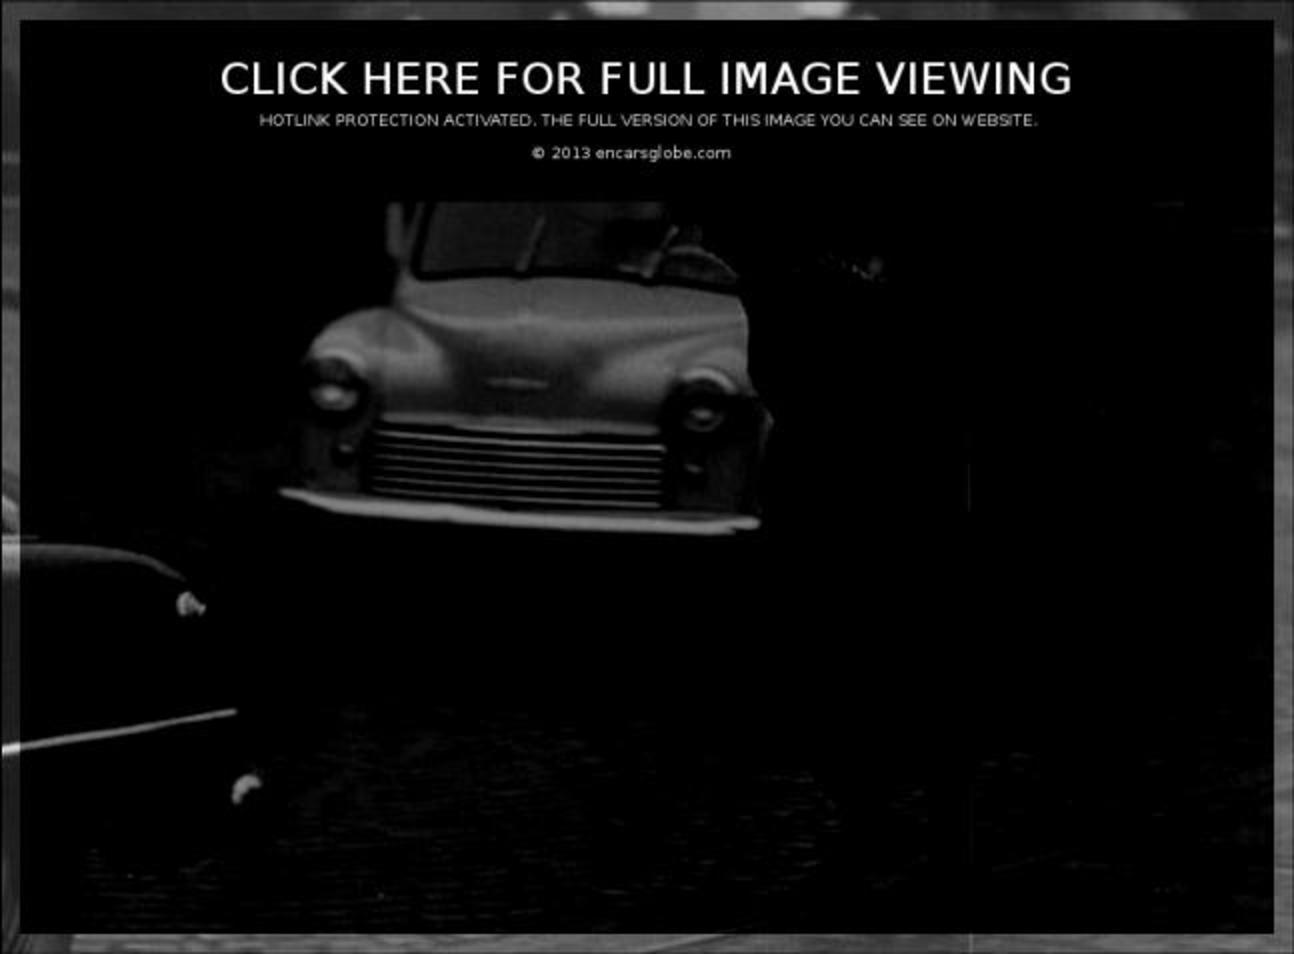 Hillman Super Minx sedan Photo Gallery: Photo #06 out of 9, Image ...